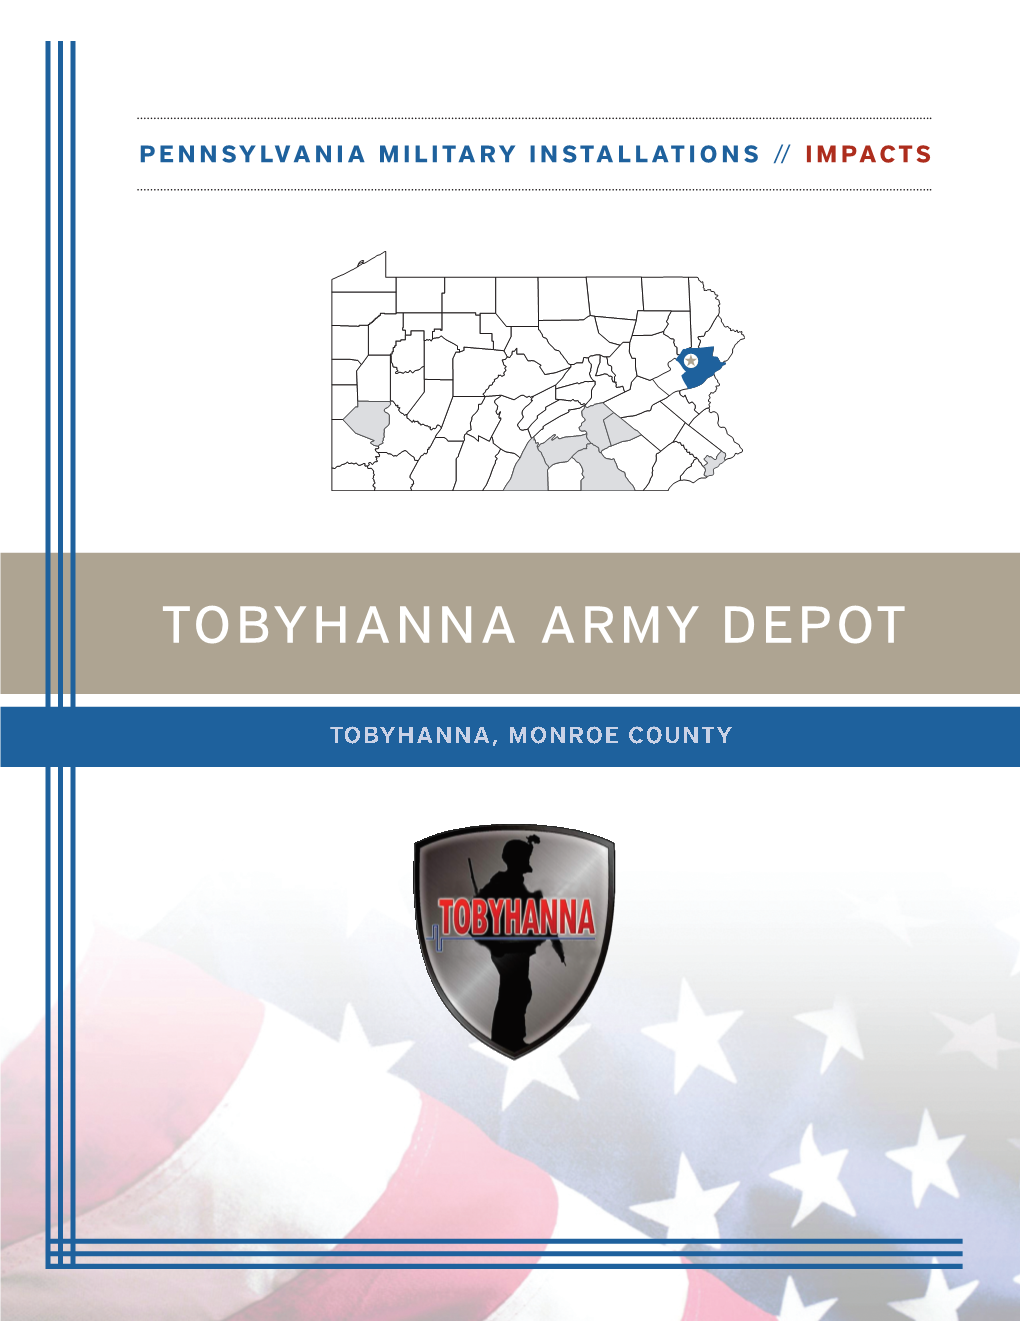 Naval Support Activity Tobyhanna Army Depot